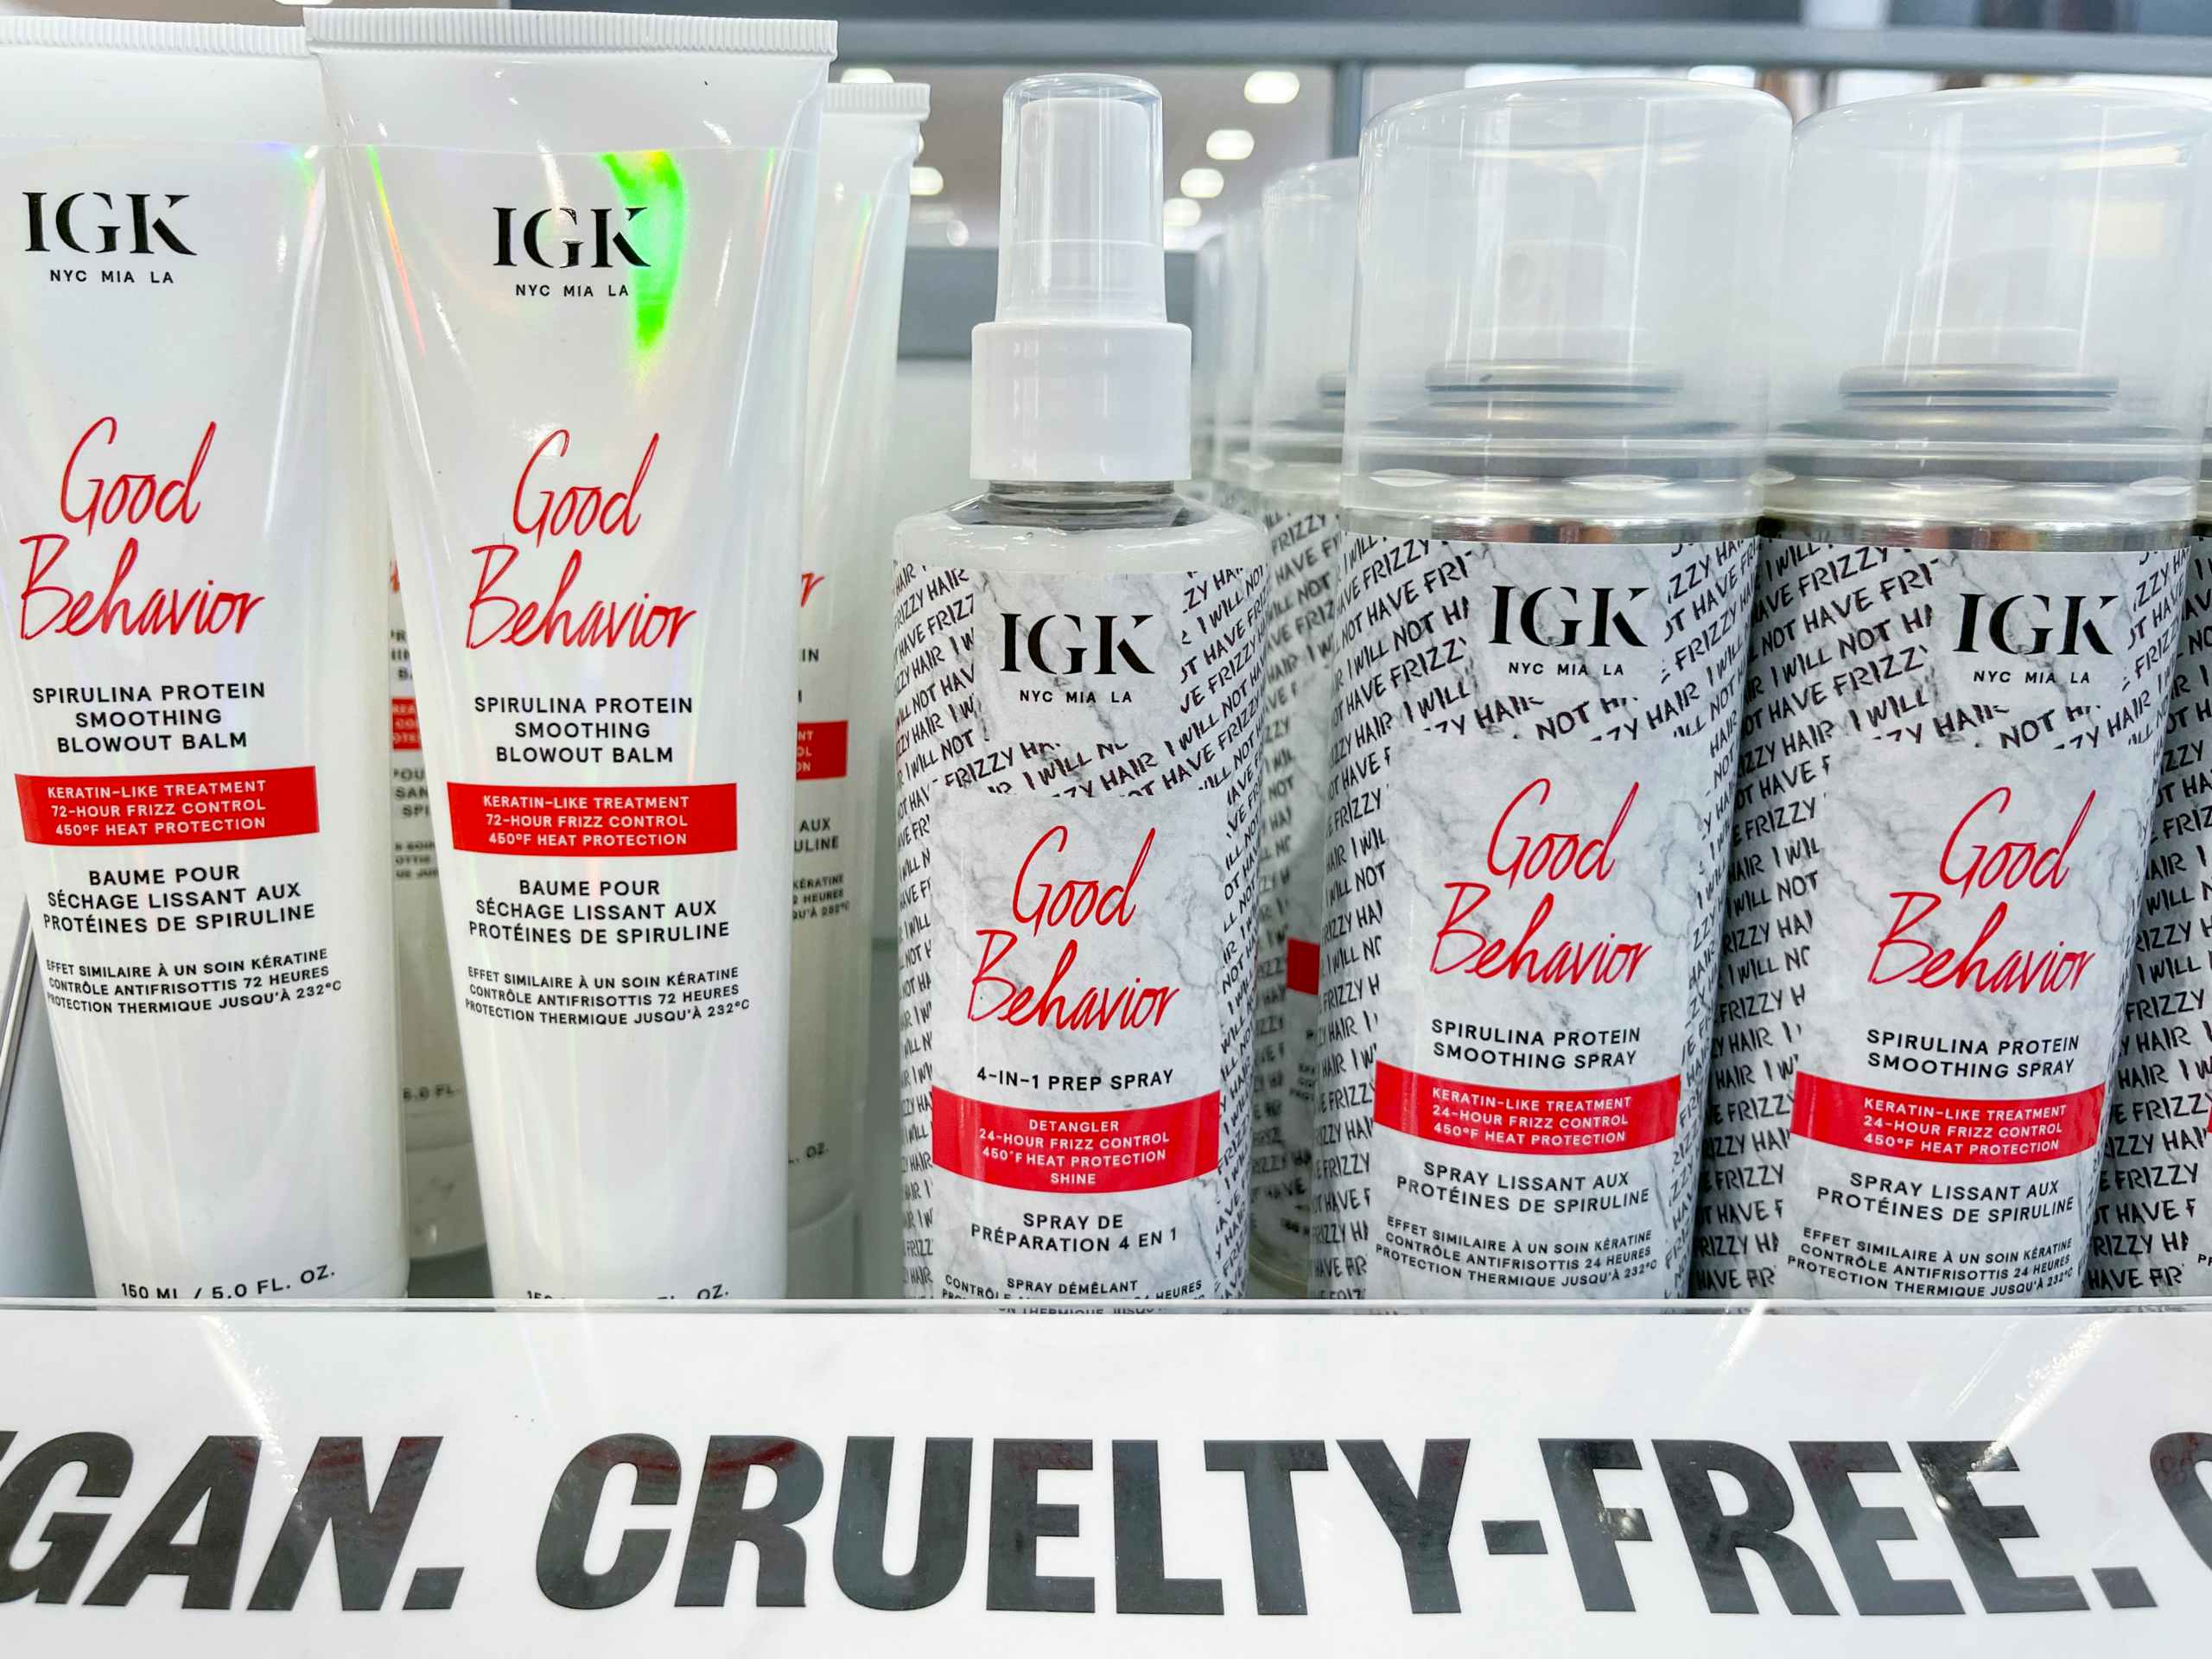 IGK Good Behavior hair products on shelf.